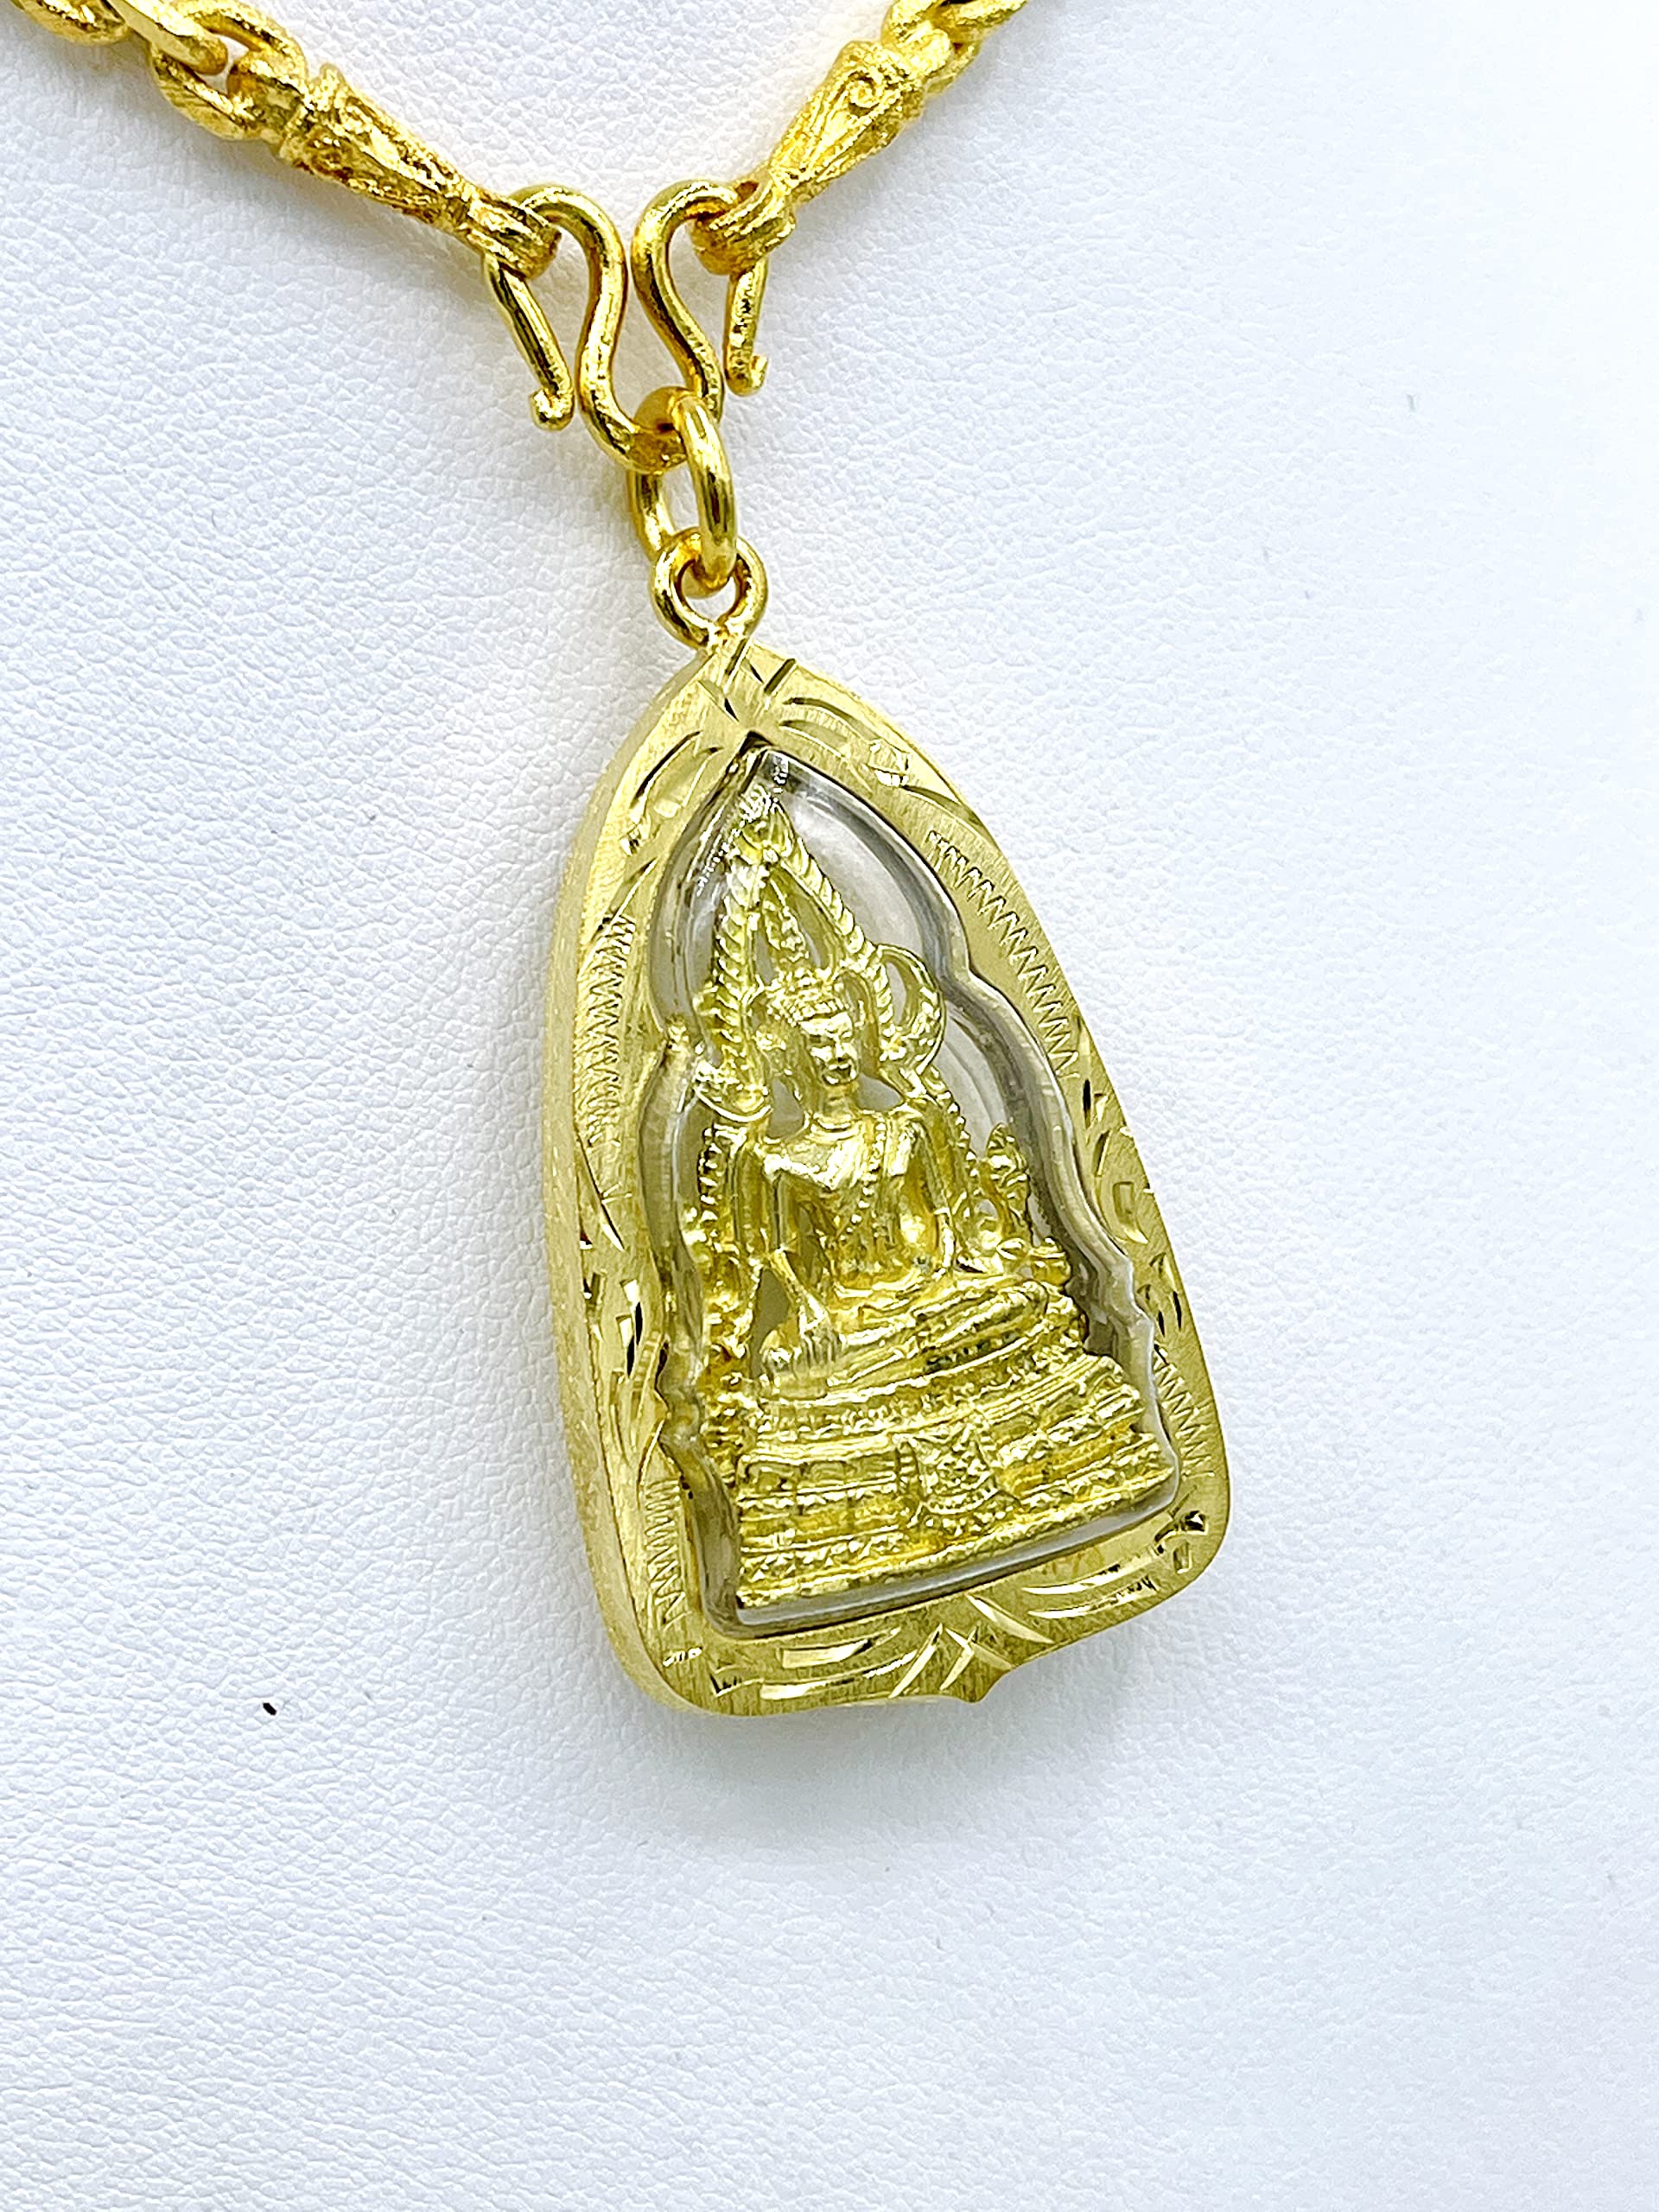 arrawana77 Phra Phuttha Chinnarat Gold Pendant Charm Thai Buddha Amulet With Case 22k Thai Baht Yellow Gold Plated Jewelry